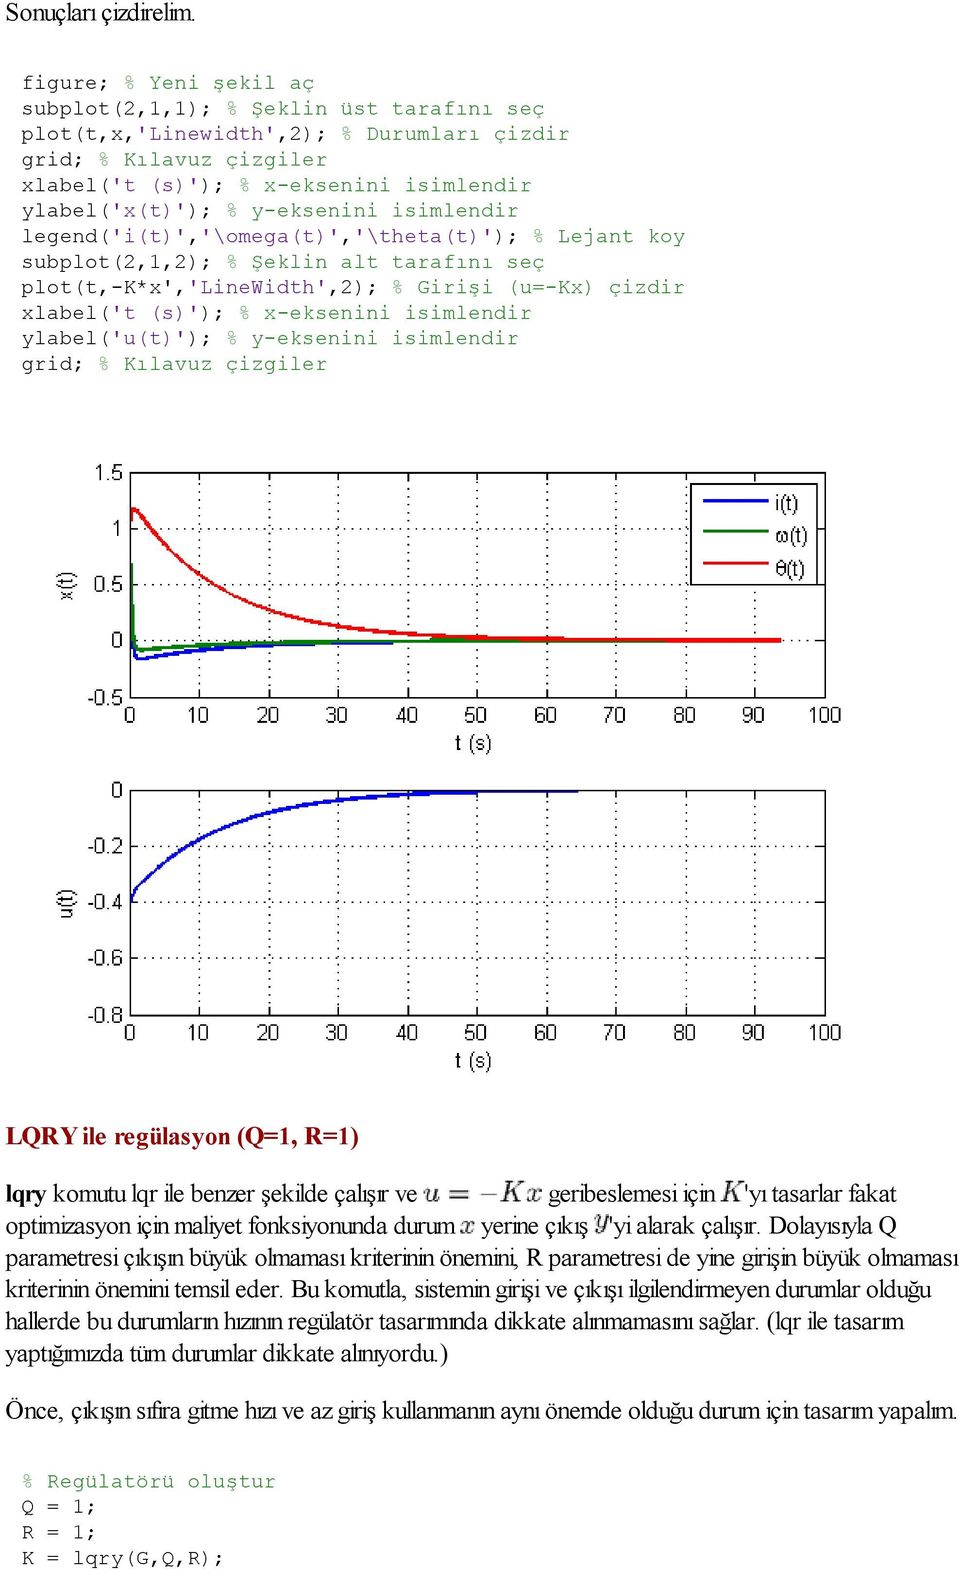 legend('i(t)','\omega(t)','\theta(t)'); % Lejant koy subplot(2,1,2); % Şeklin alt tarafını seç plot(t,-k*x','linewidth',2); % Girişi (u=-kx) çizdir % x-eksenini isimlendir ylabel('u(t)'); %